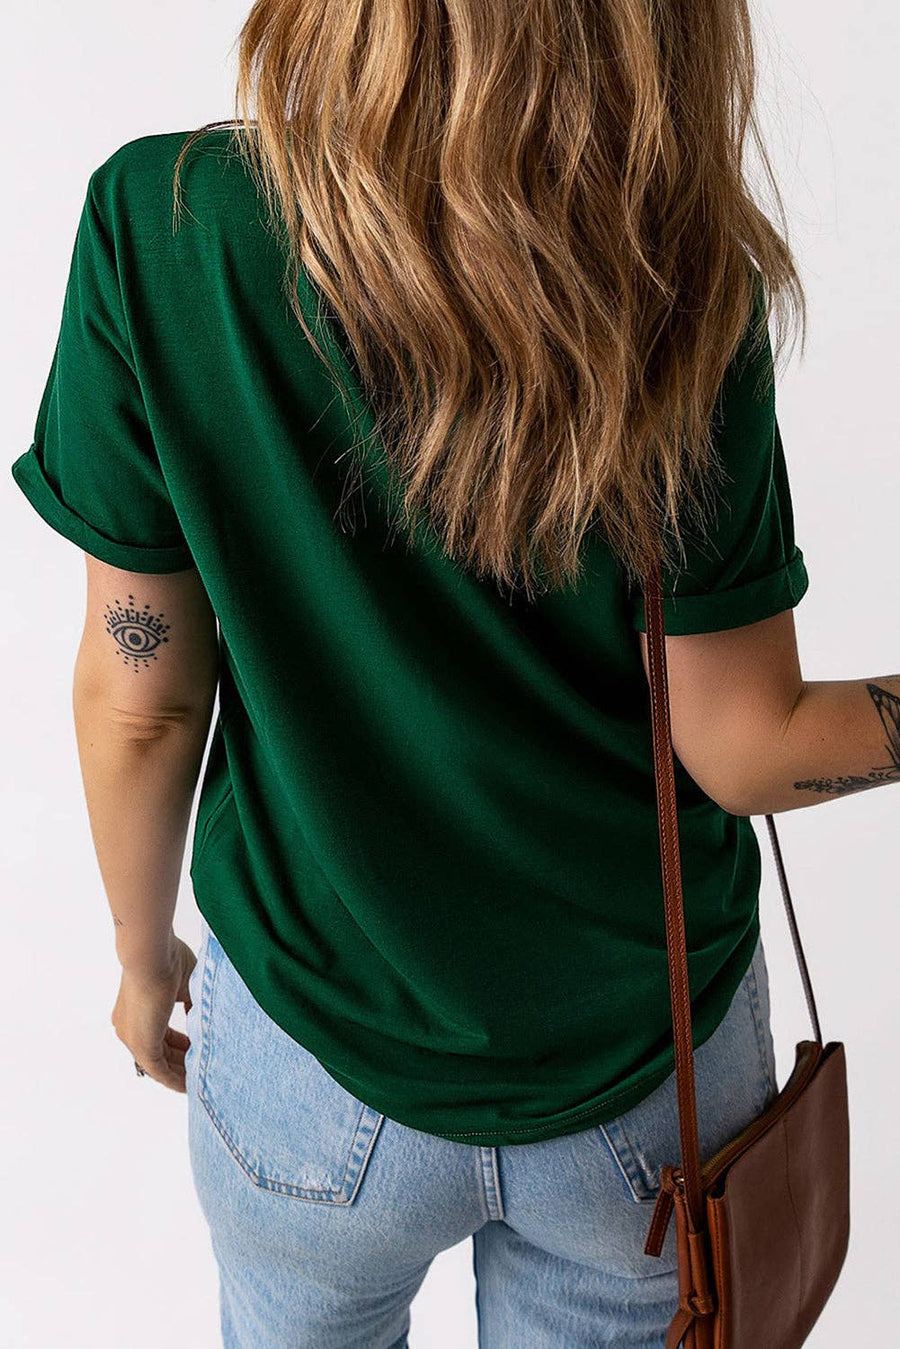 Lovesoft - Green Lets Day Drink Clover Print Round Neck T Shirt: Green / M / 62%Polyester+32%Cotton+6%Elastane